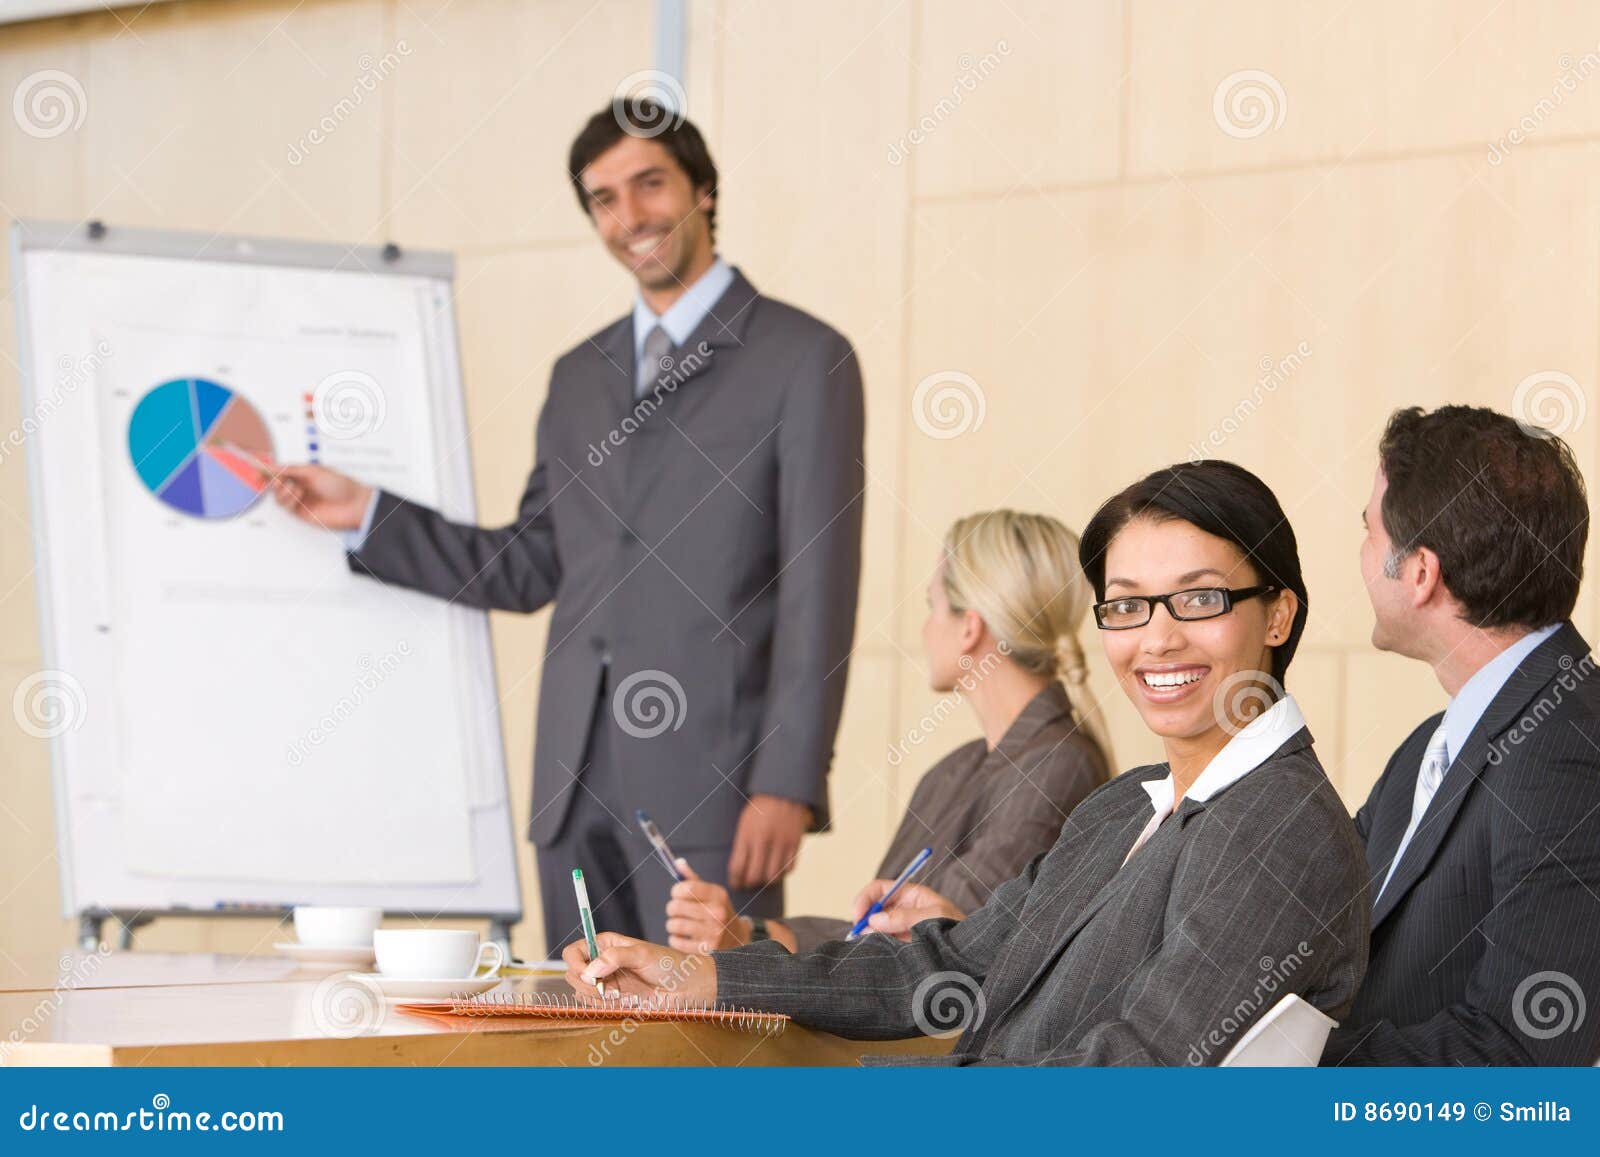 person giving presentation